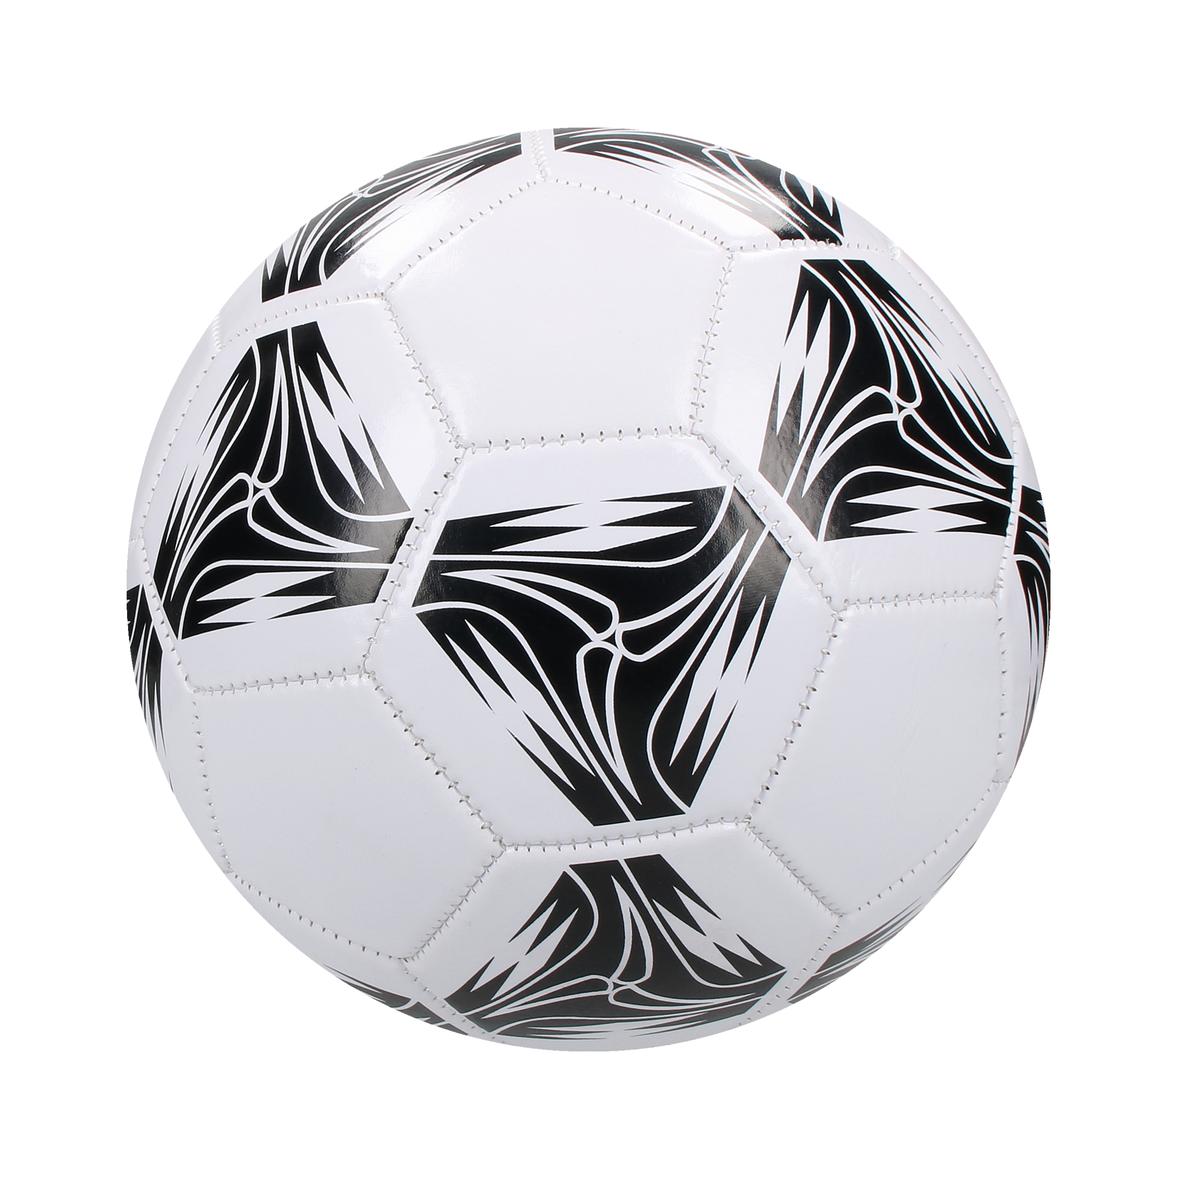 PVC Football of Size 5 - Fishbourne